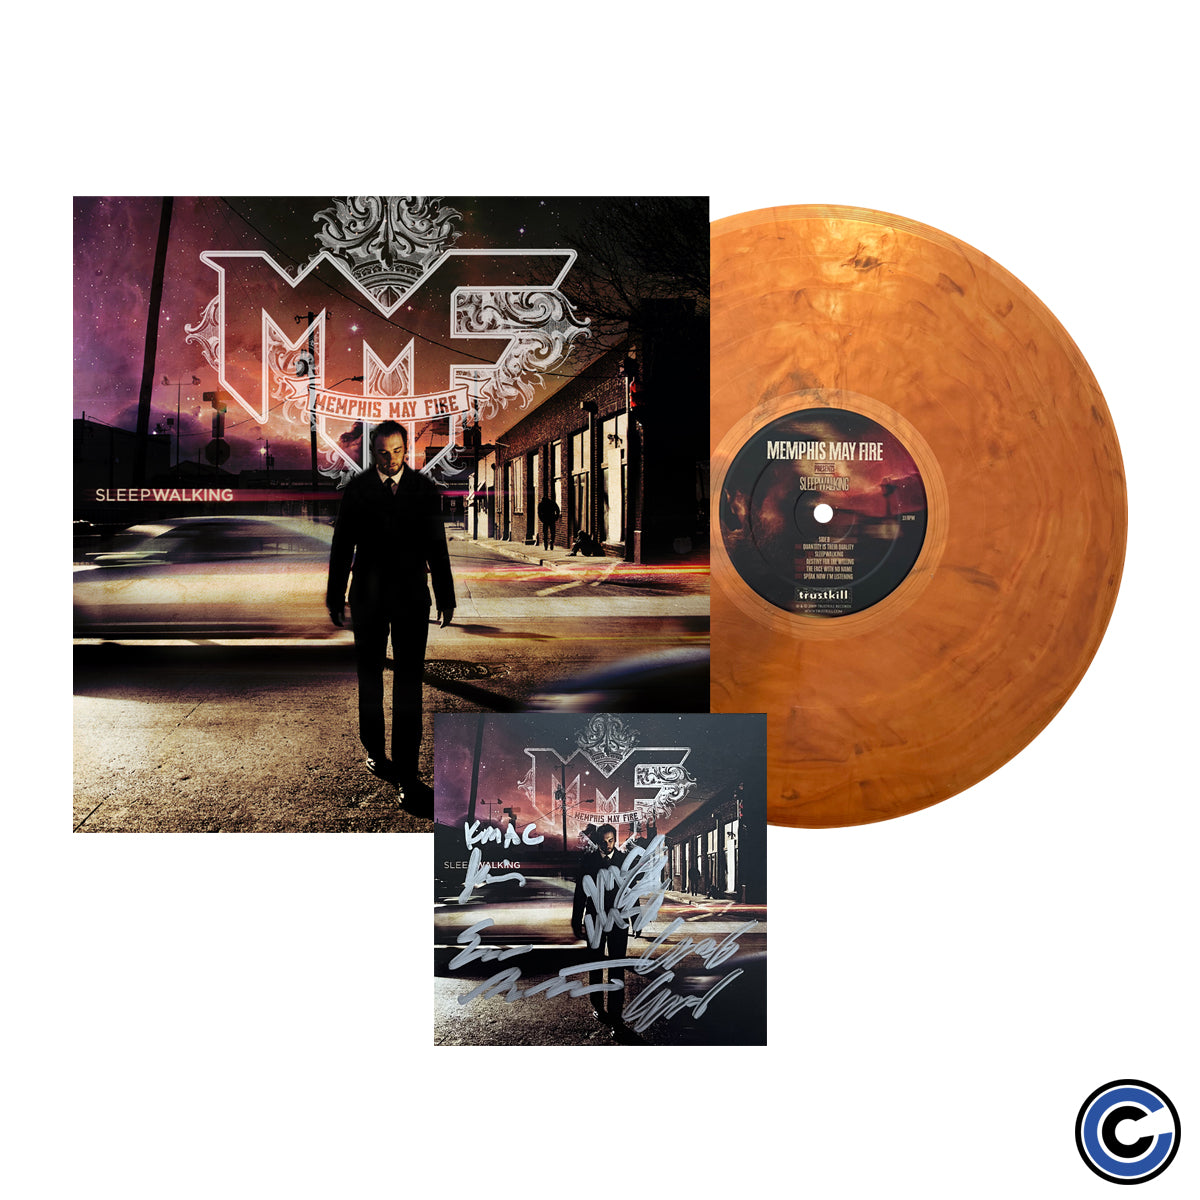 Memphis May Fire "Sleepwalking" 12" Vinyl LP + Autographed Booklet Bundle